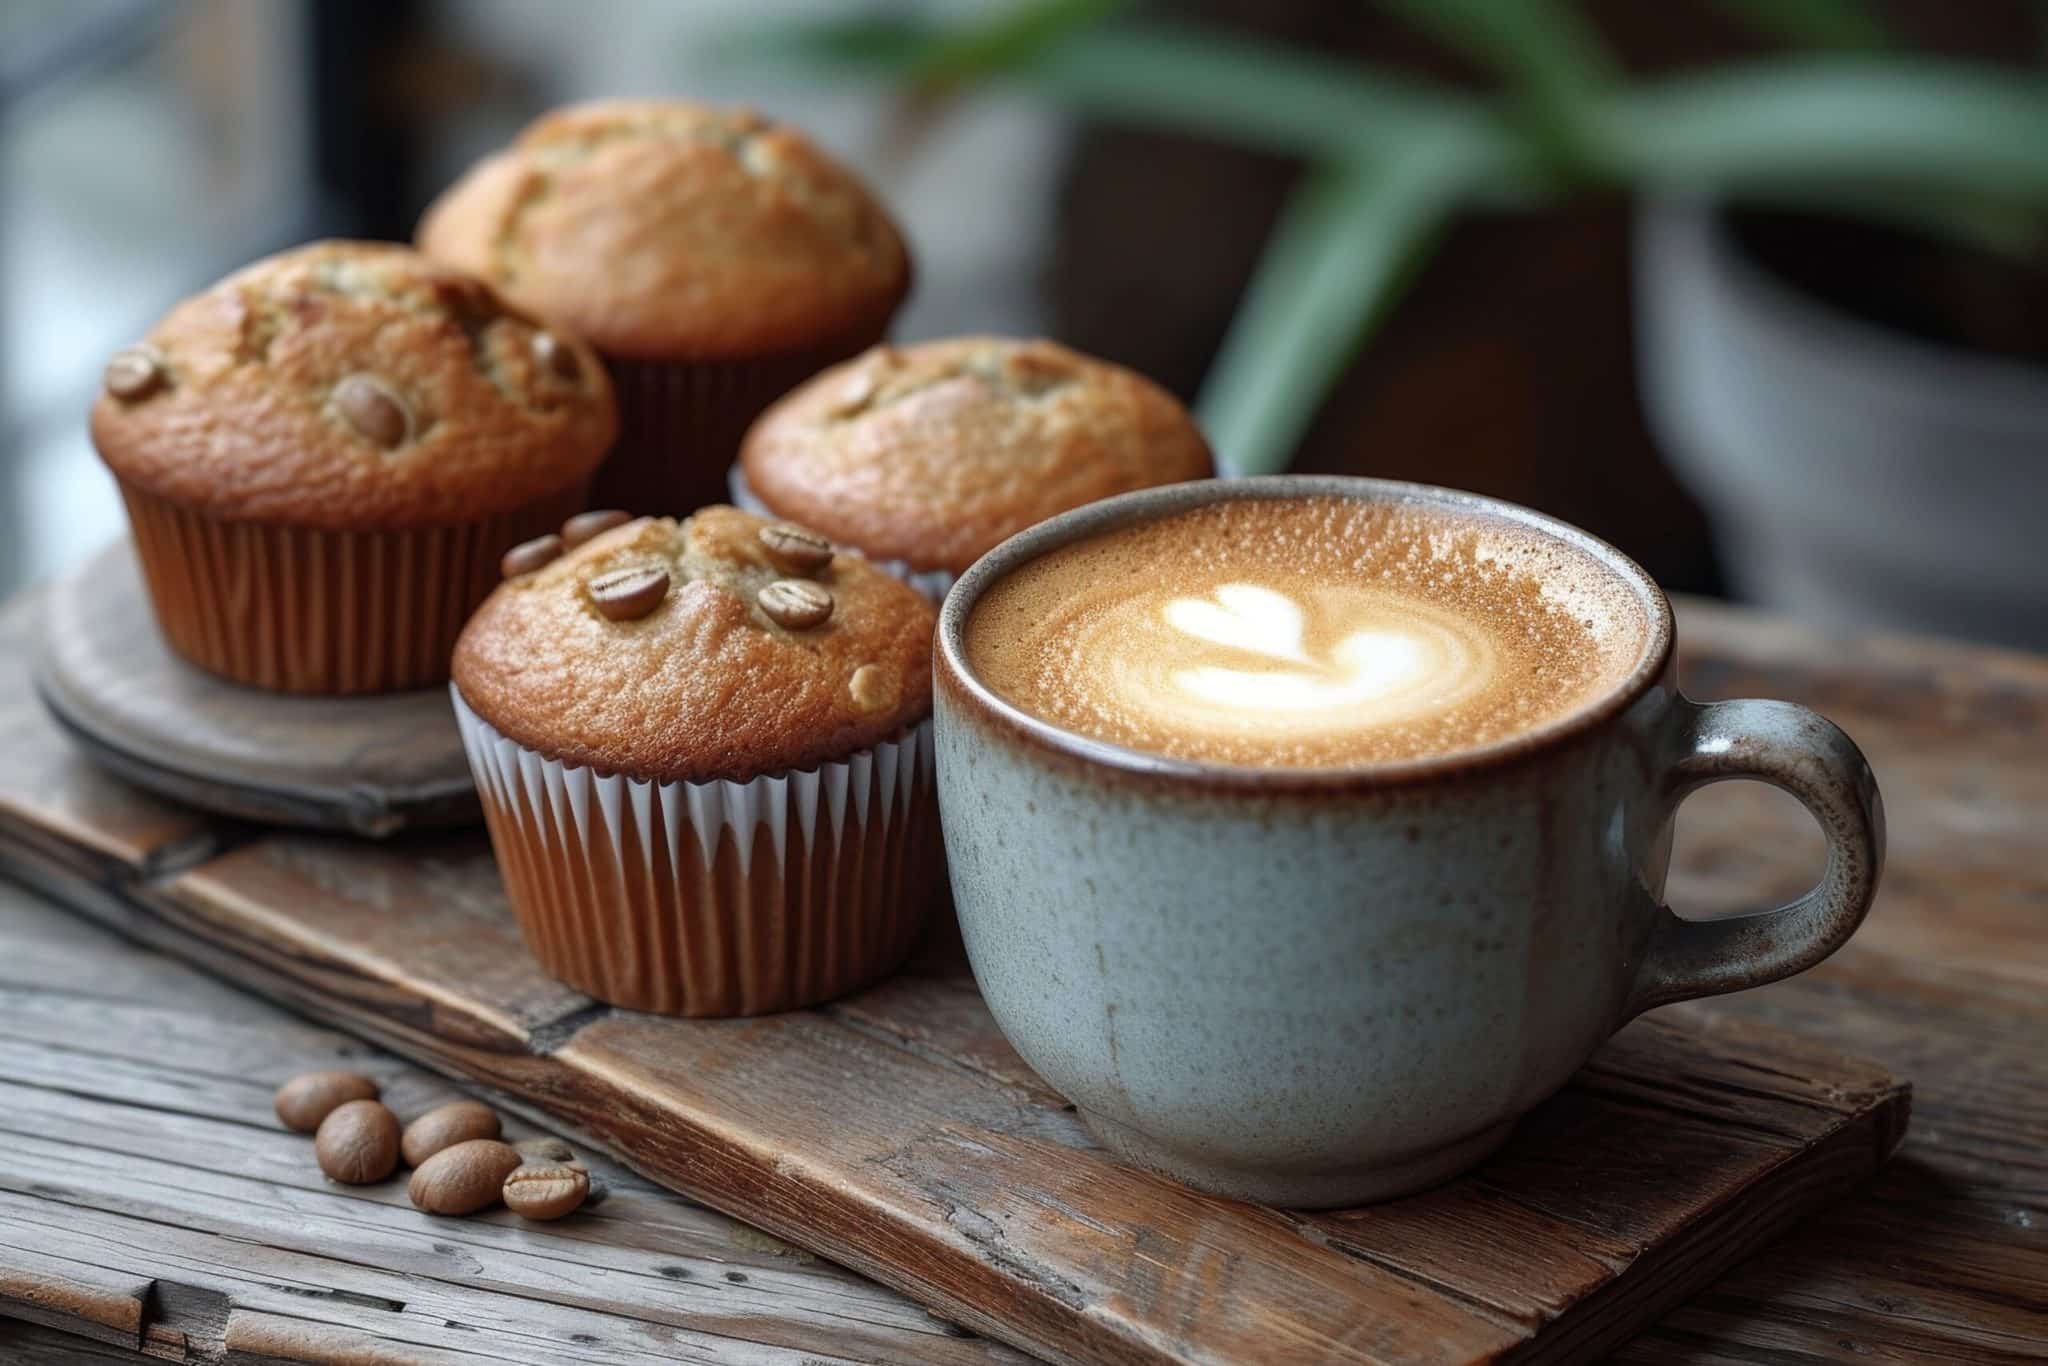 Muffin al caffe scaled.jpg